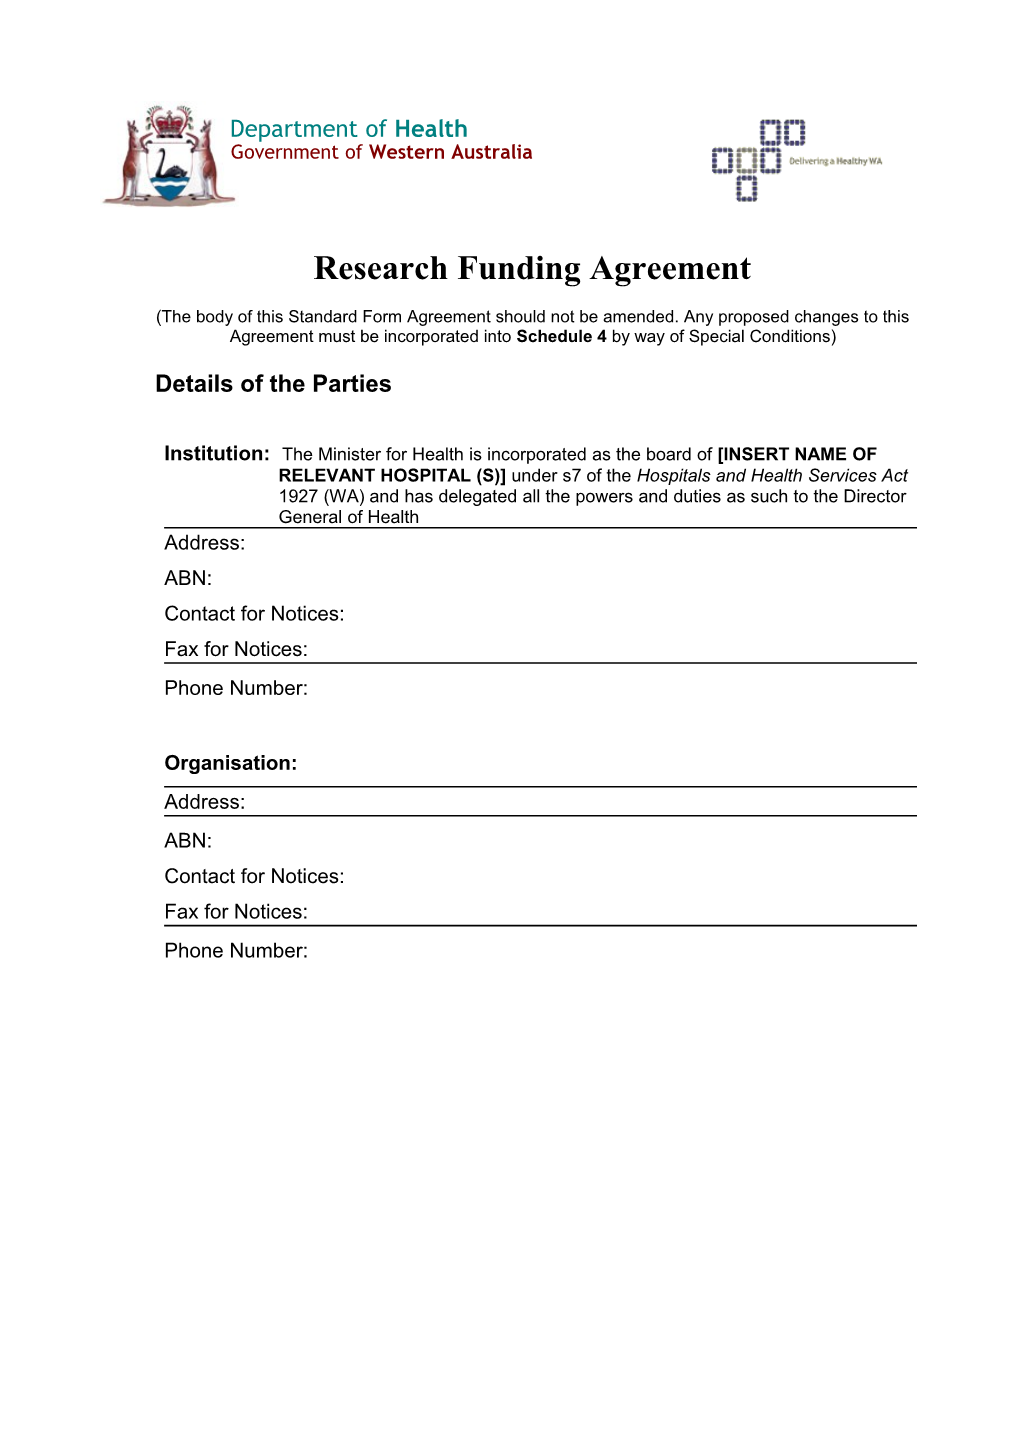 WA Research Funding Agreement